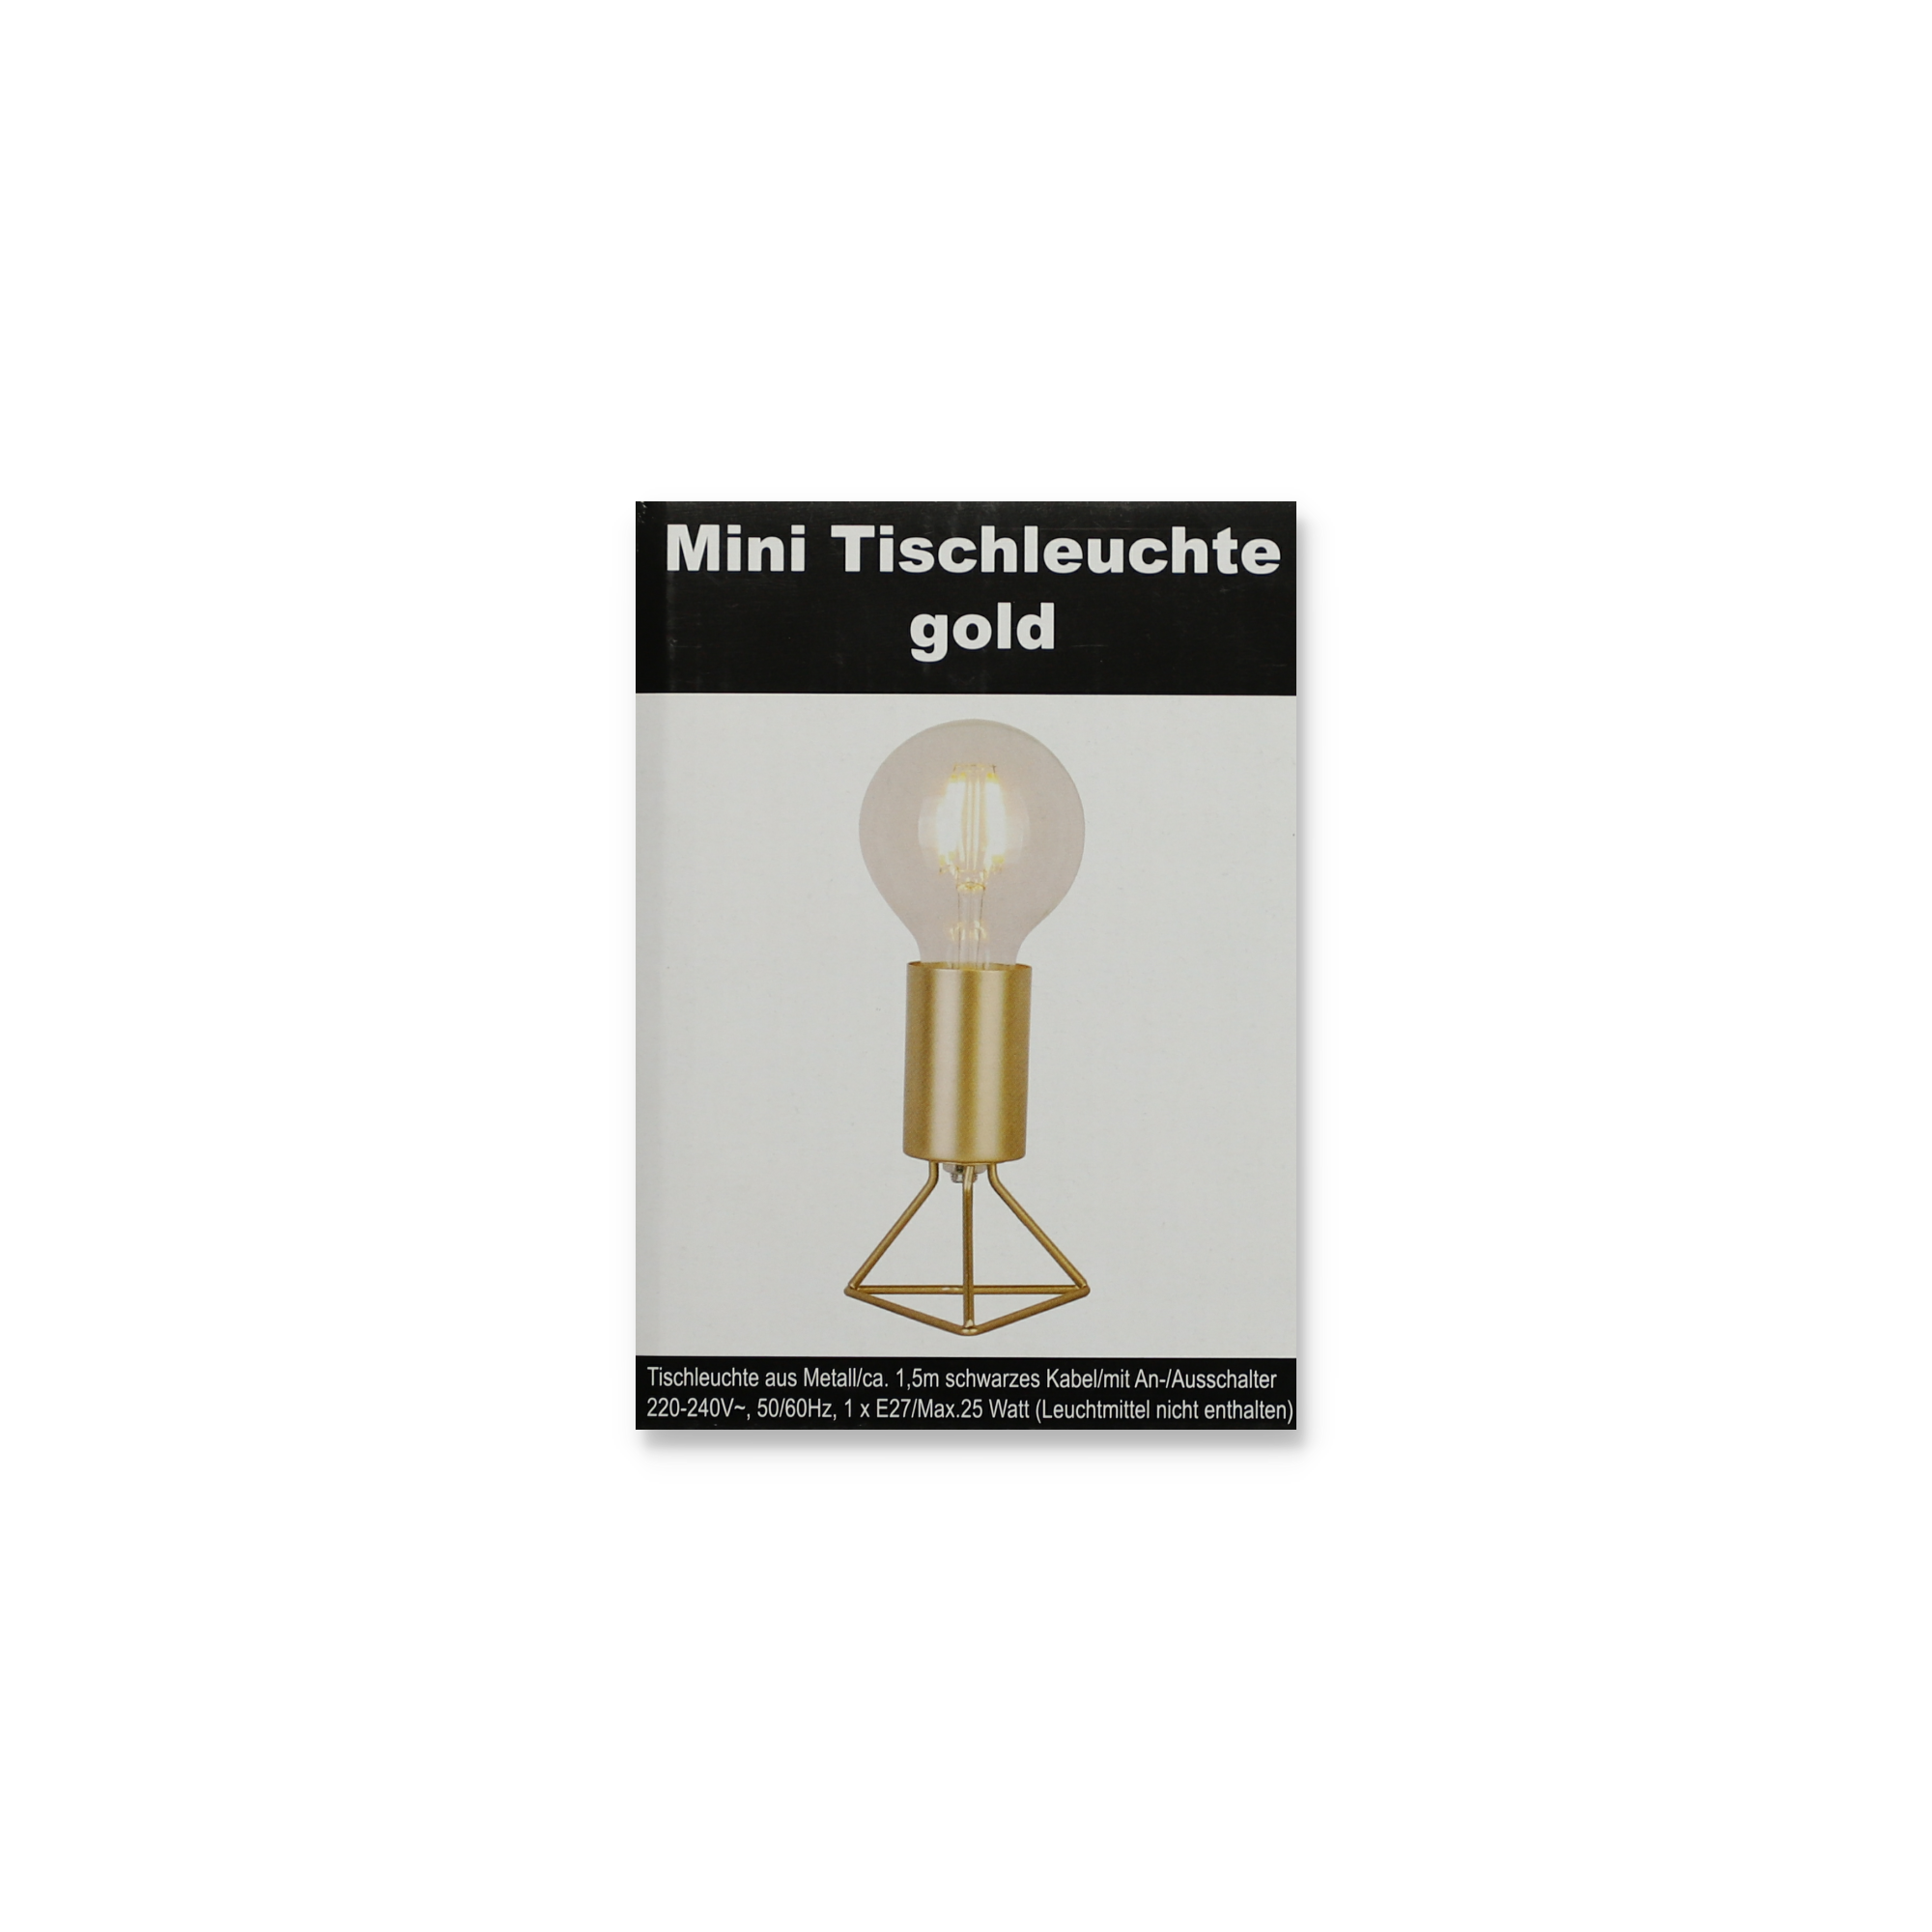 Tischleuchte 'Mini' gold 8,8 x 12,5 cm + product picture